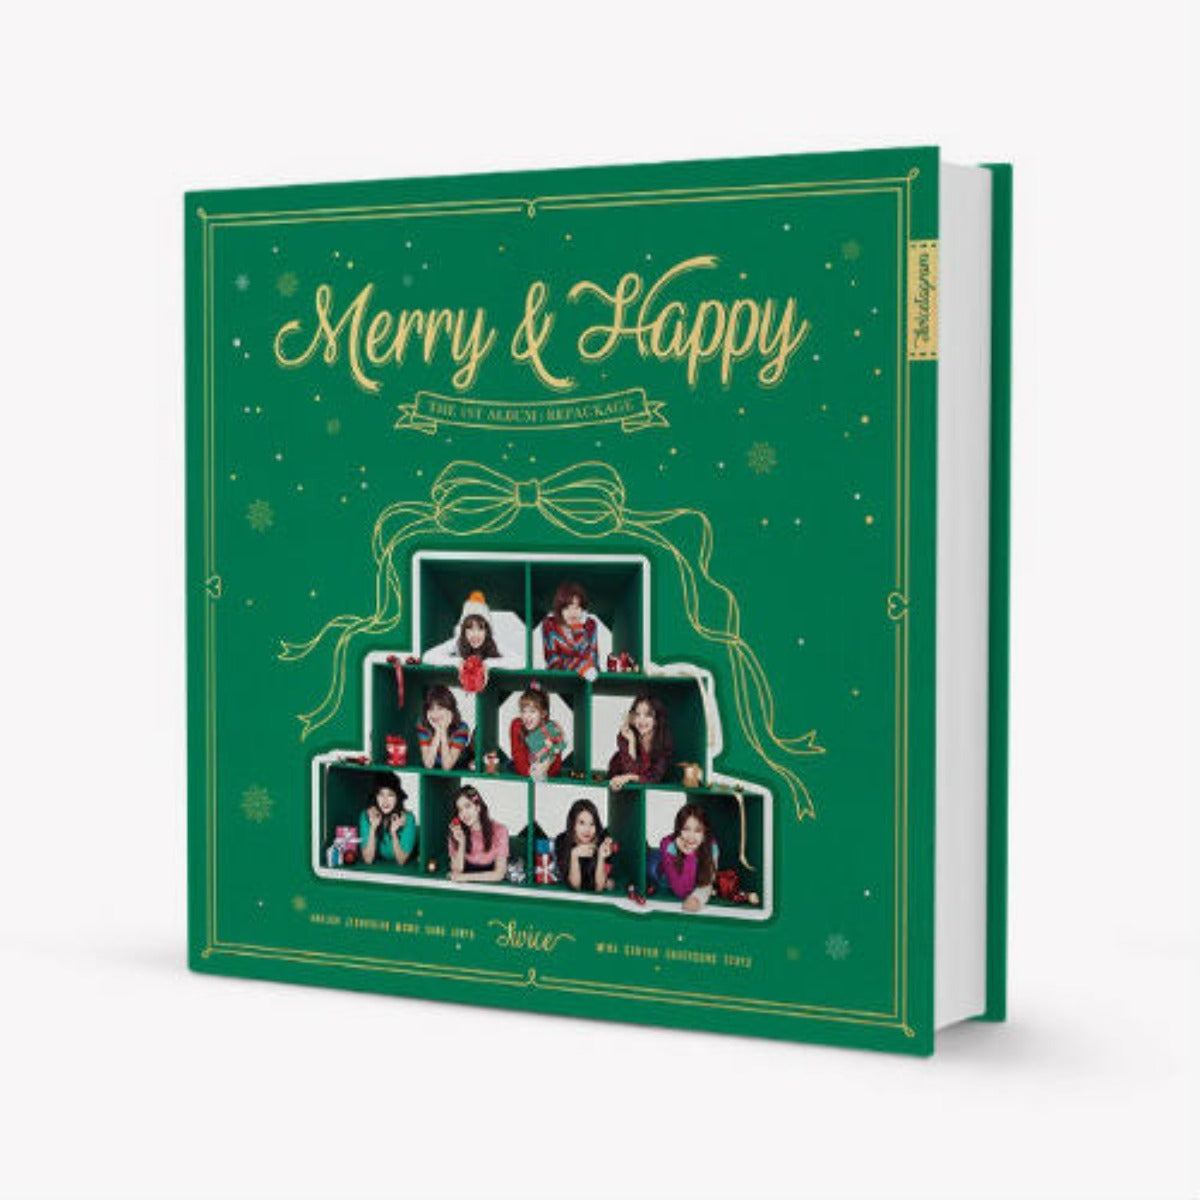 Twice The 1st Album Repackage - Merry & Happy